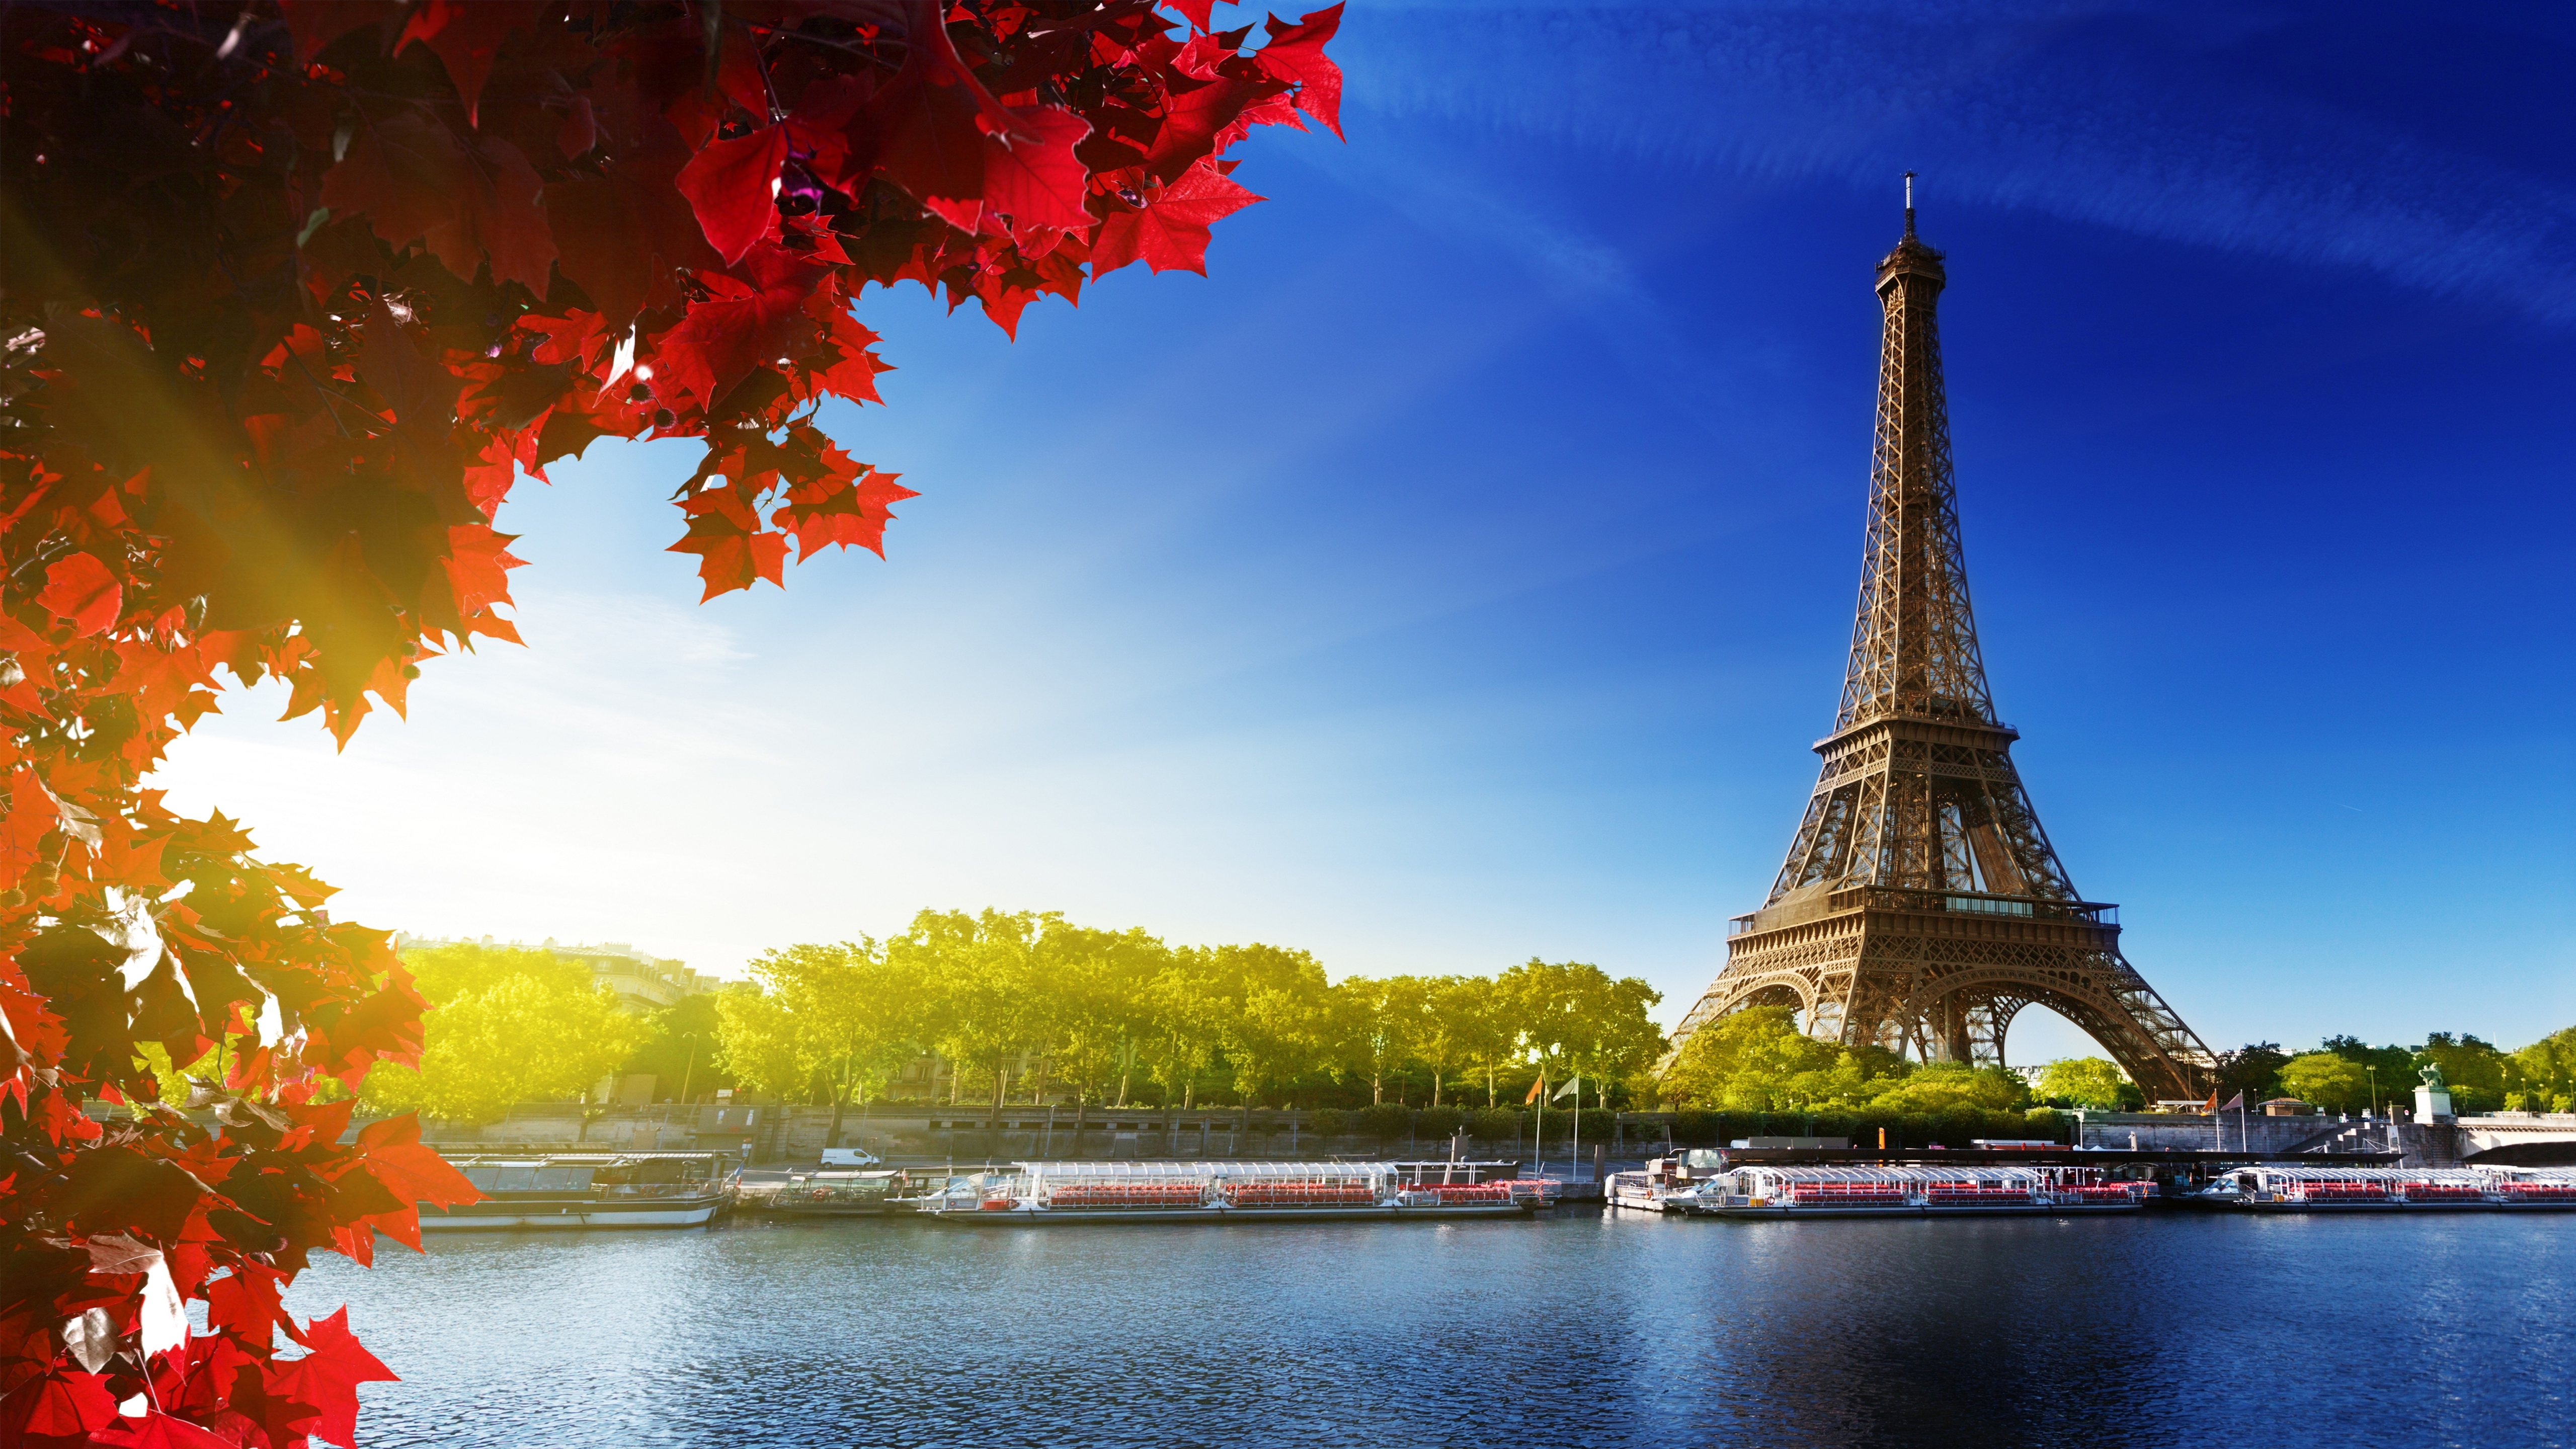 Eiffel Tower Paris for 5120 x 2880 5K Ultra HD resolution